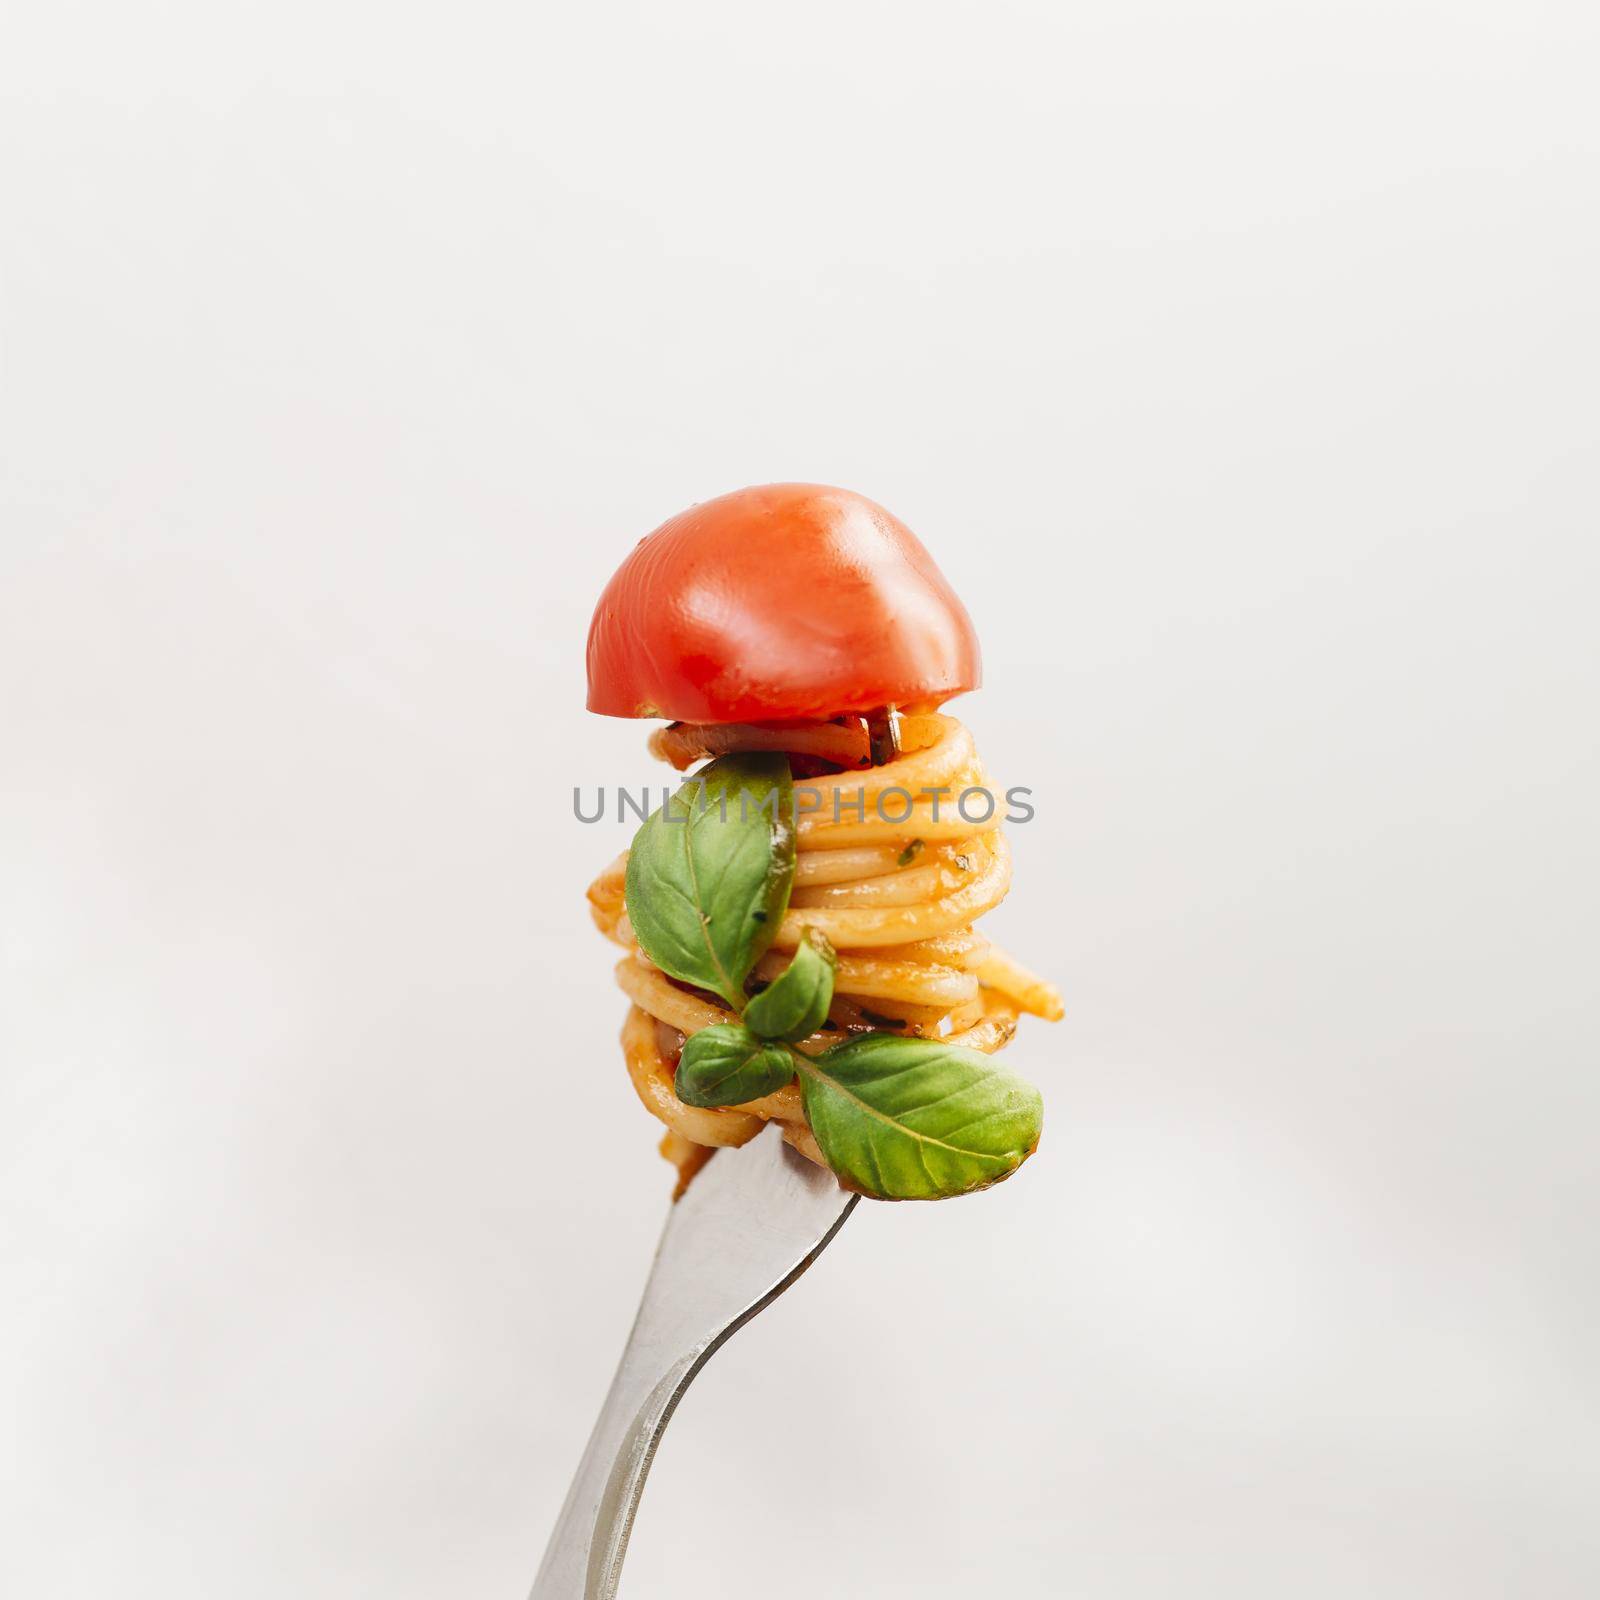 tasty spaghetti wrapped around fork. High quality beautiful photo concept by Zahard